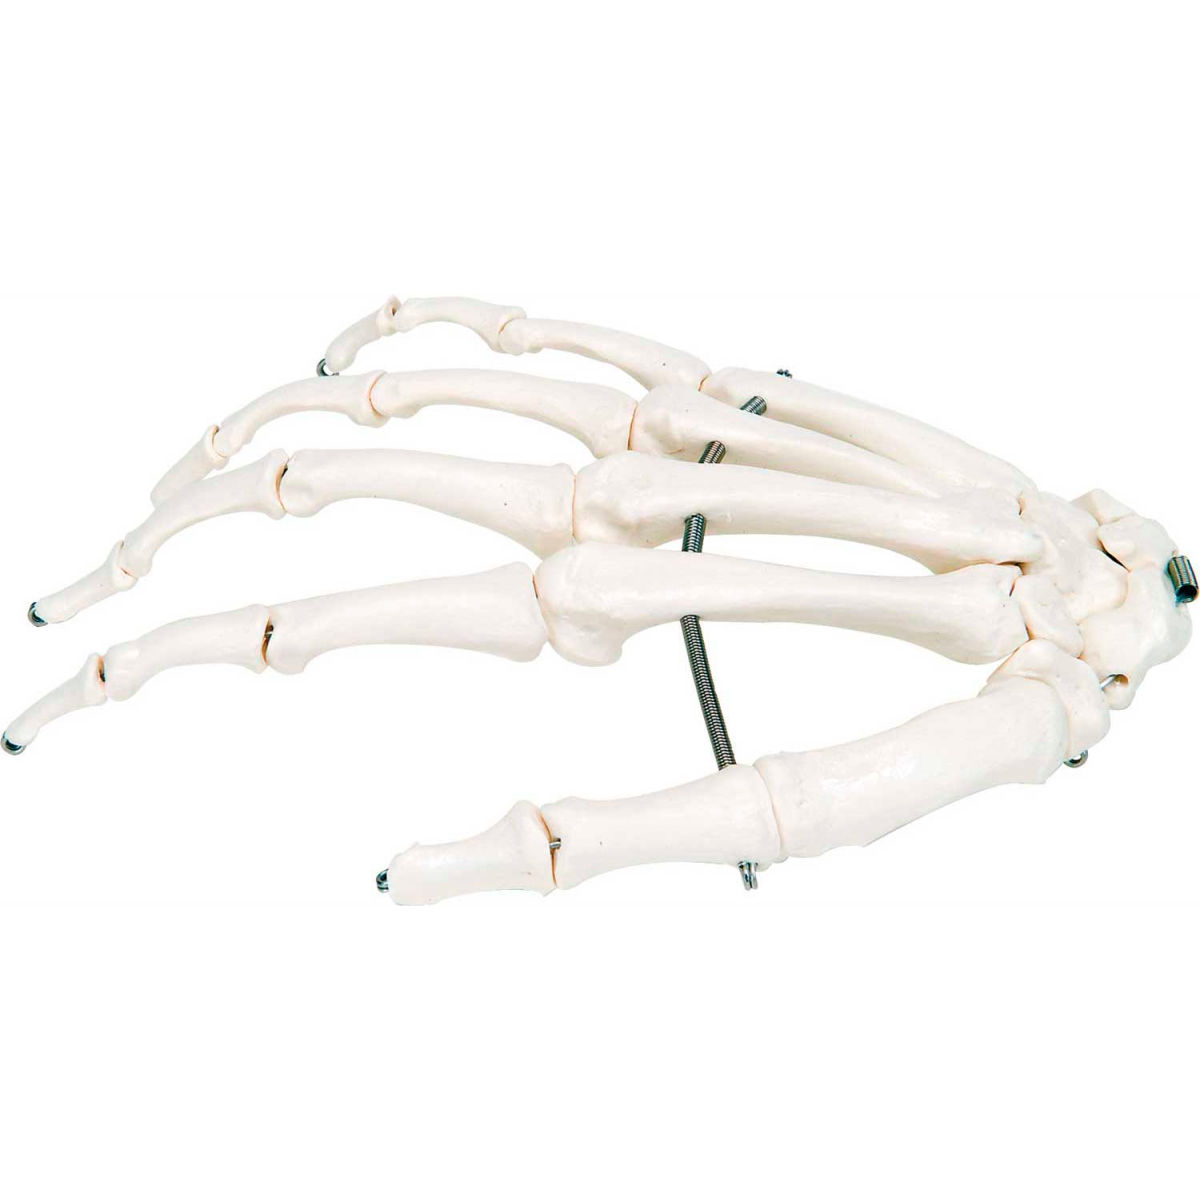 Picture of Fabrication Enterprises B2138122 3B Anatomical Model - Right Loose Bones Hand Skeleton